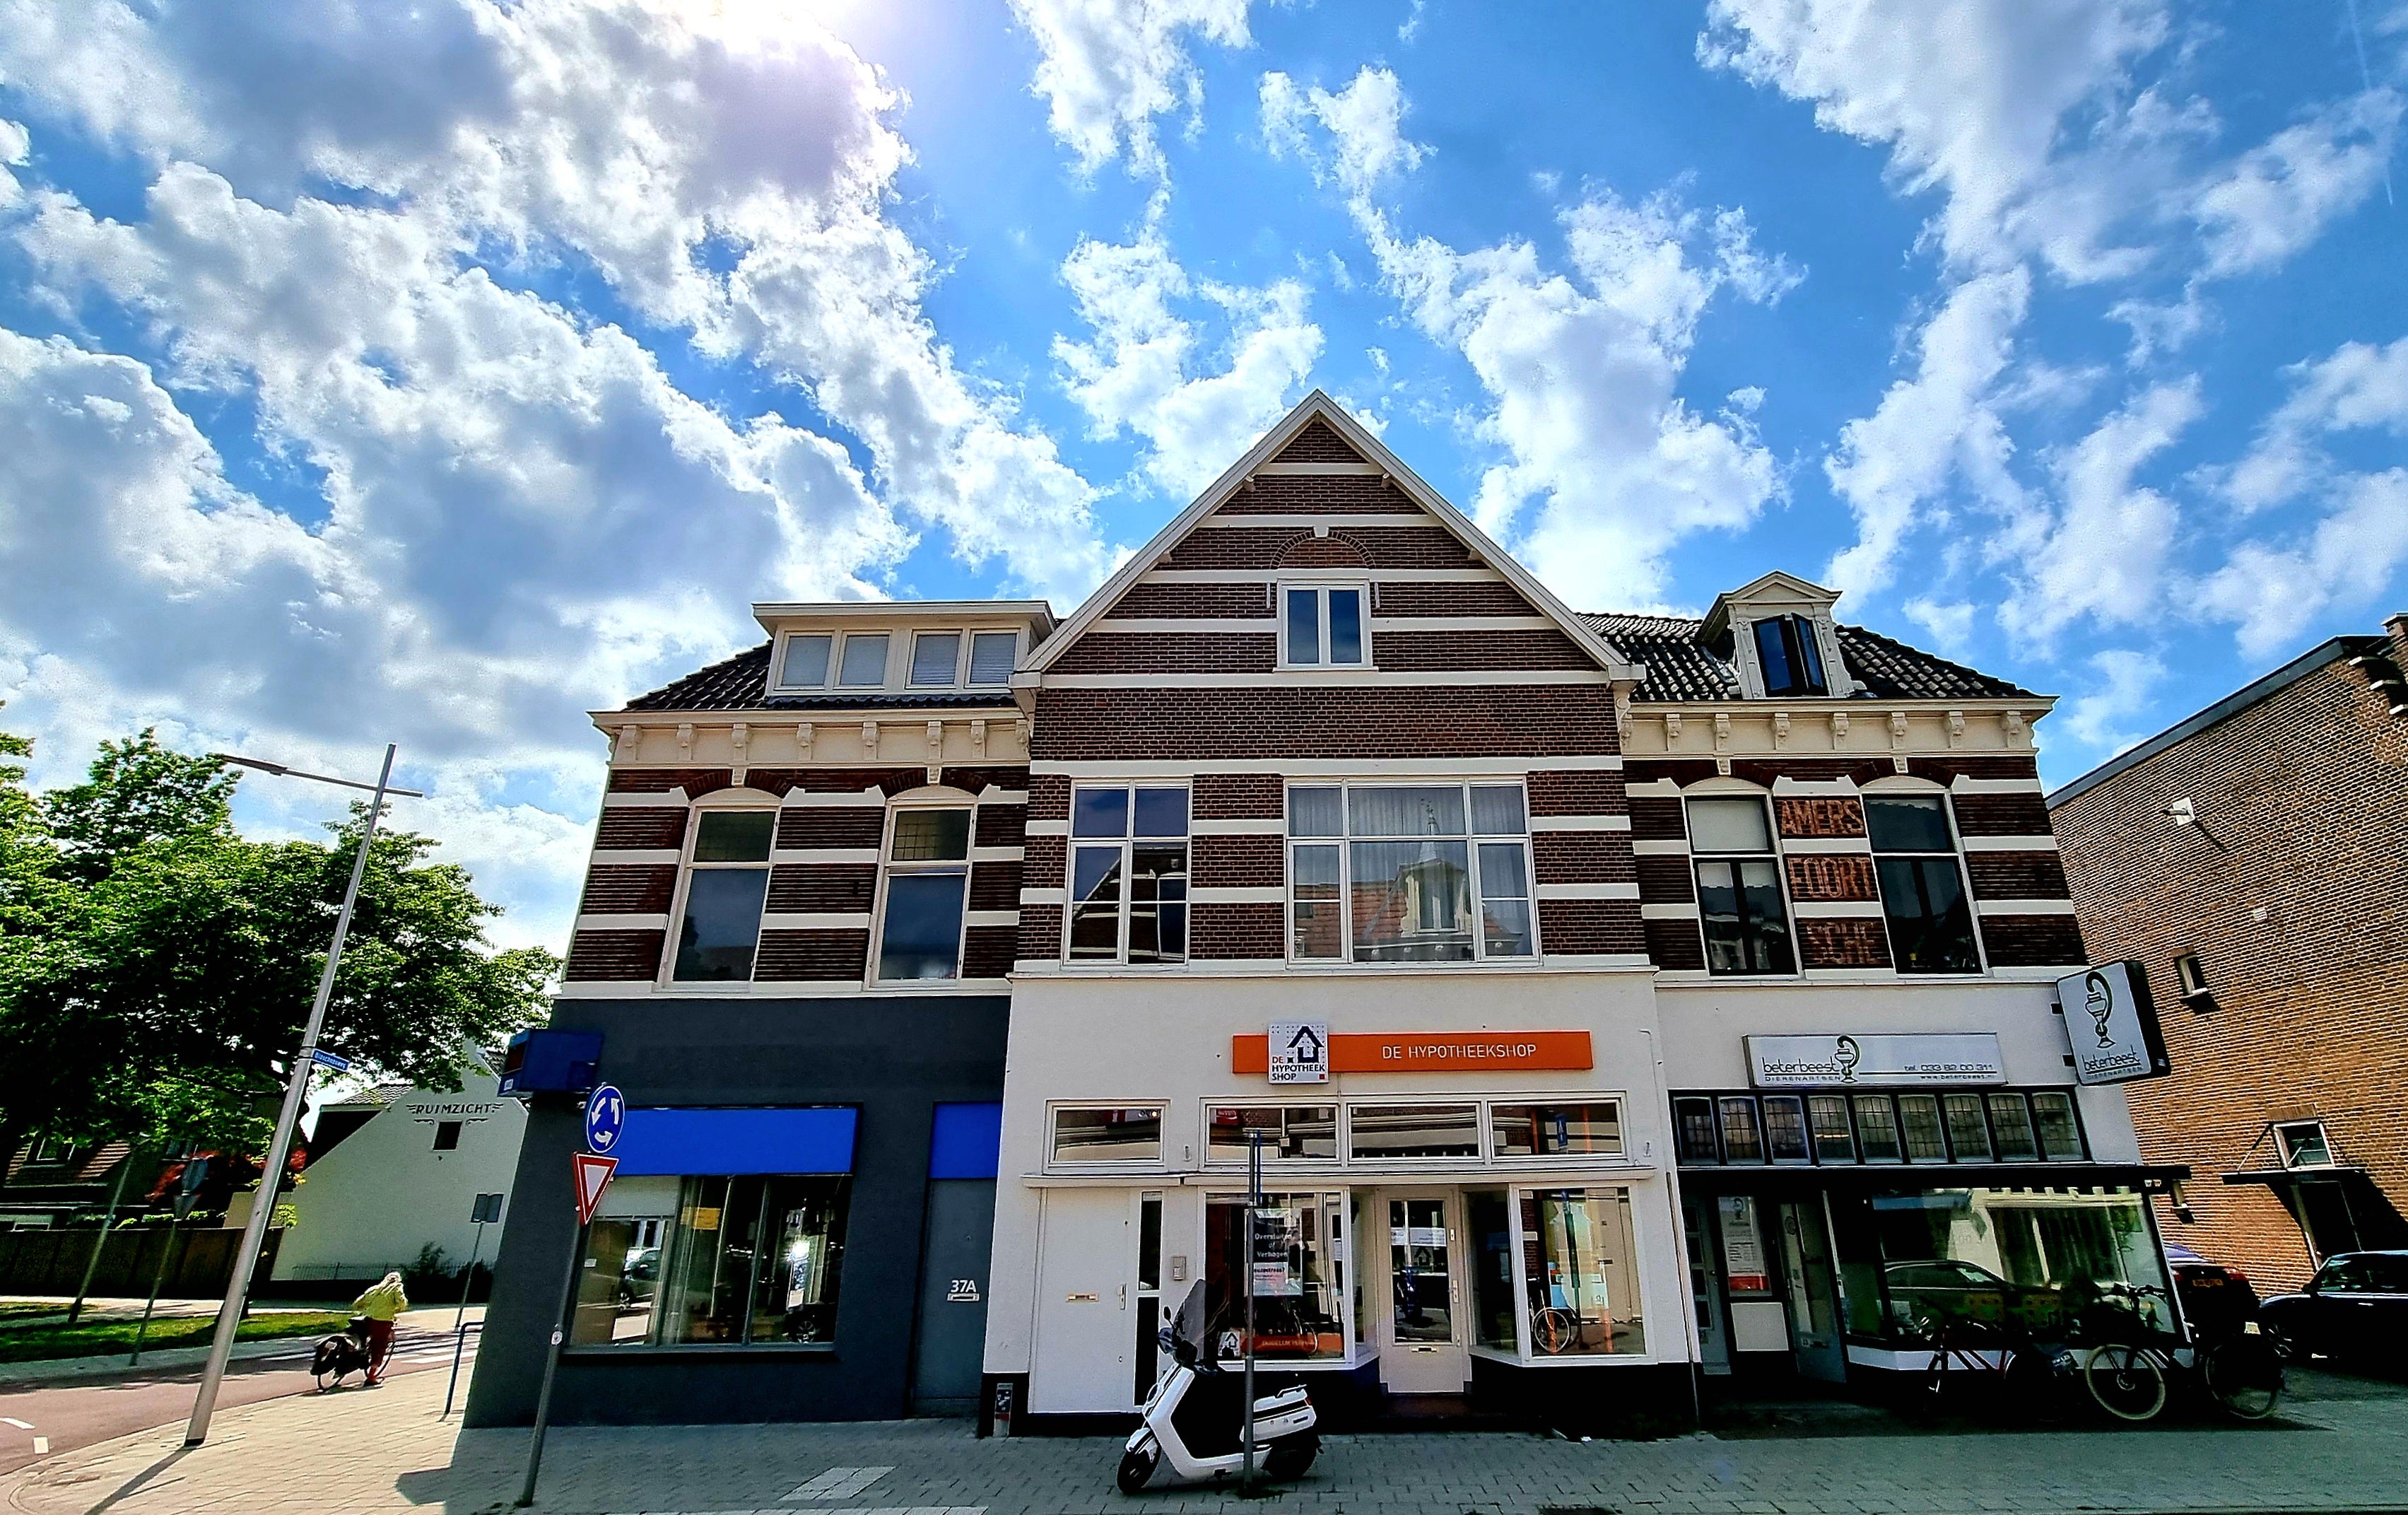 Amersfoort Hendrik van Viandenstraat